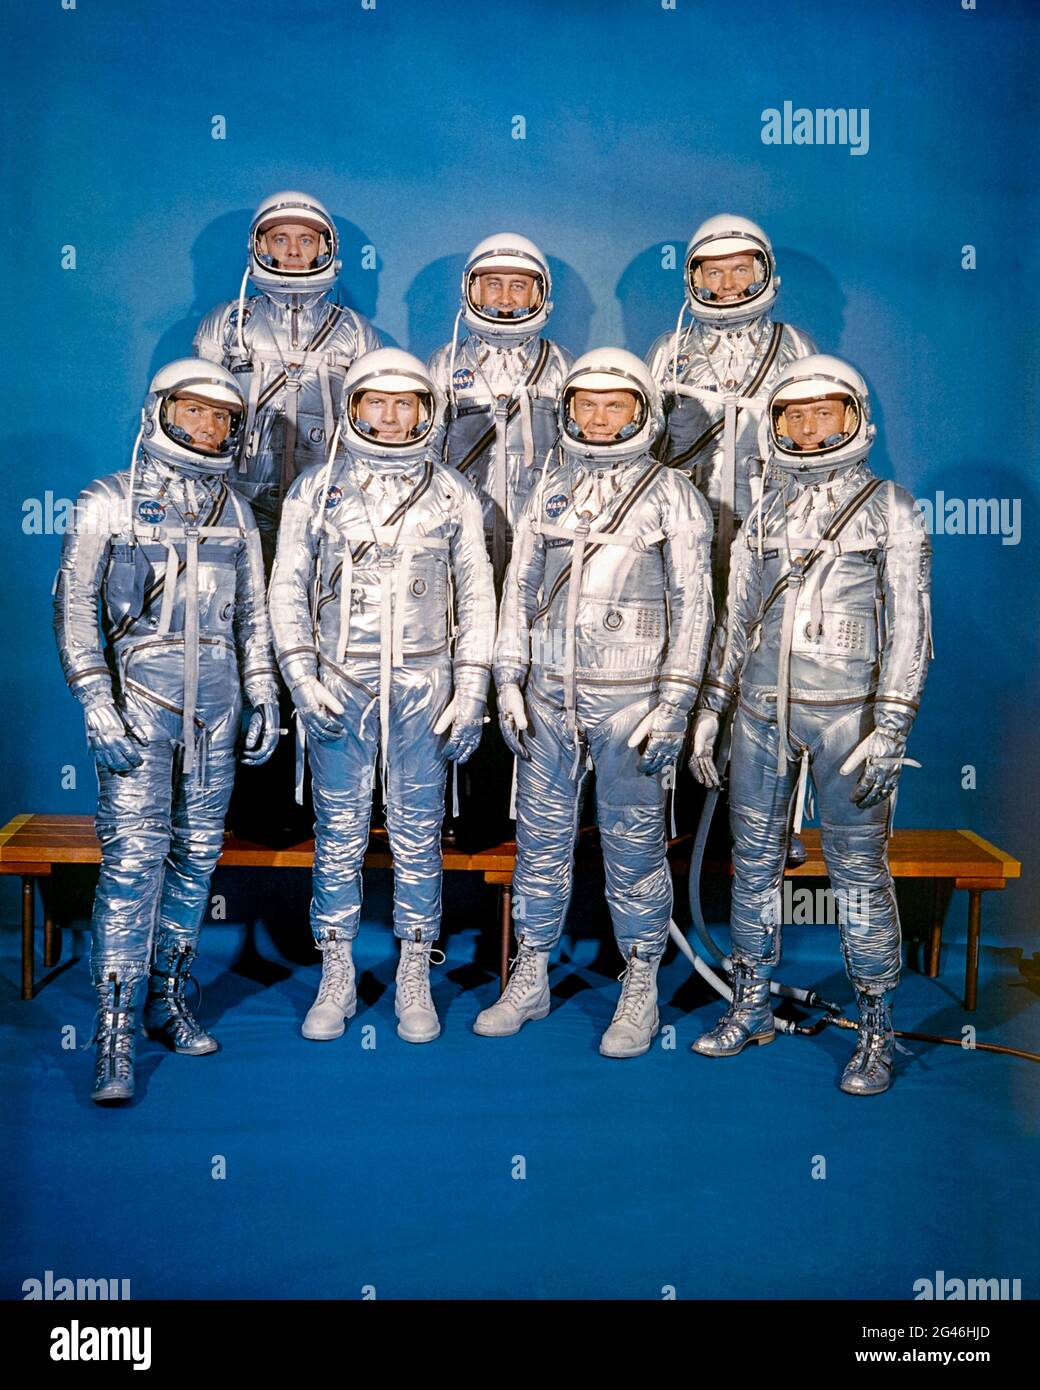 The Mercury Seven, also known as the Original Seven, were American astronauts Scott Carpenter, Gordon Cooper, John Glenn, Gus Grissom, Wally Schirra, Alan Shepard, and Deke Slayton shown photographed on 17 March 1960. Stock Photo